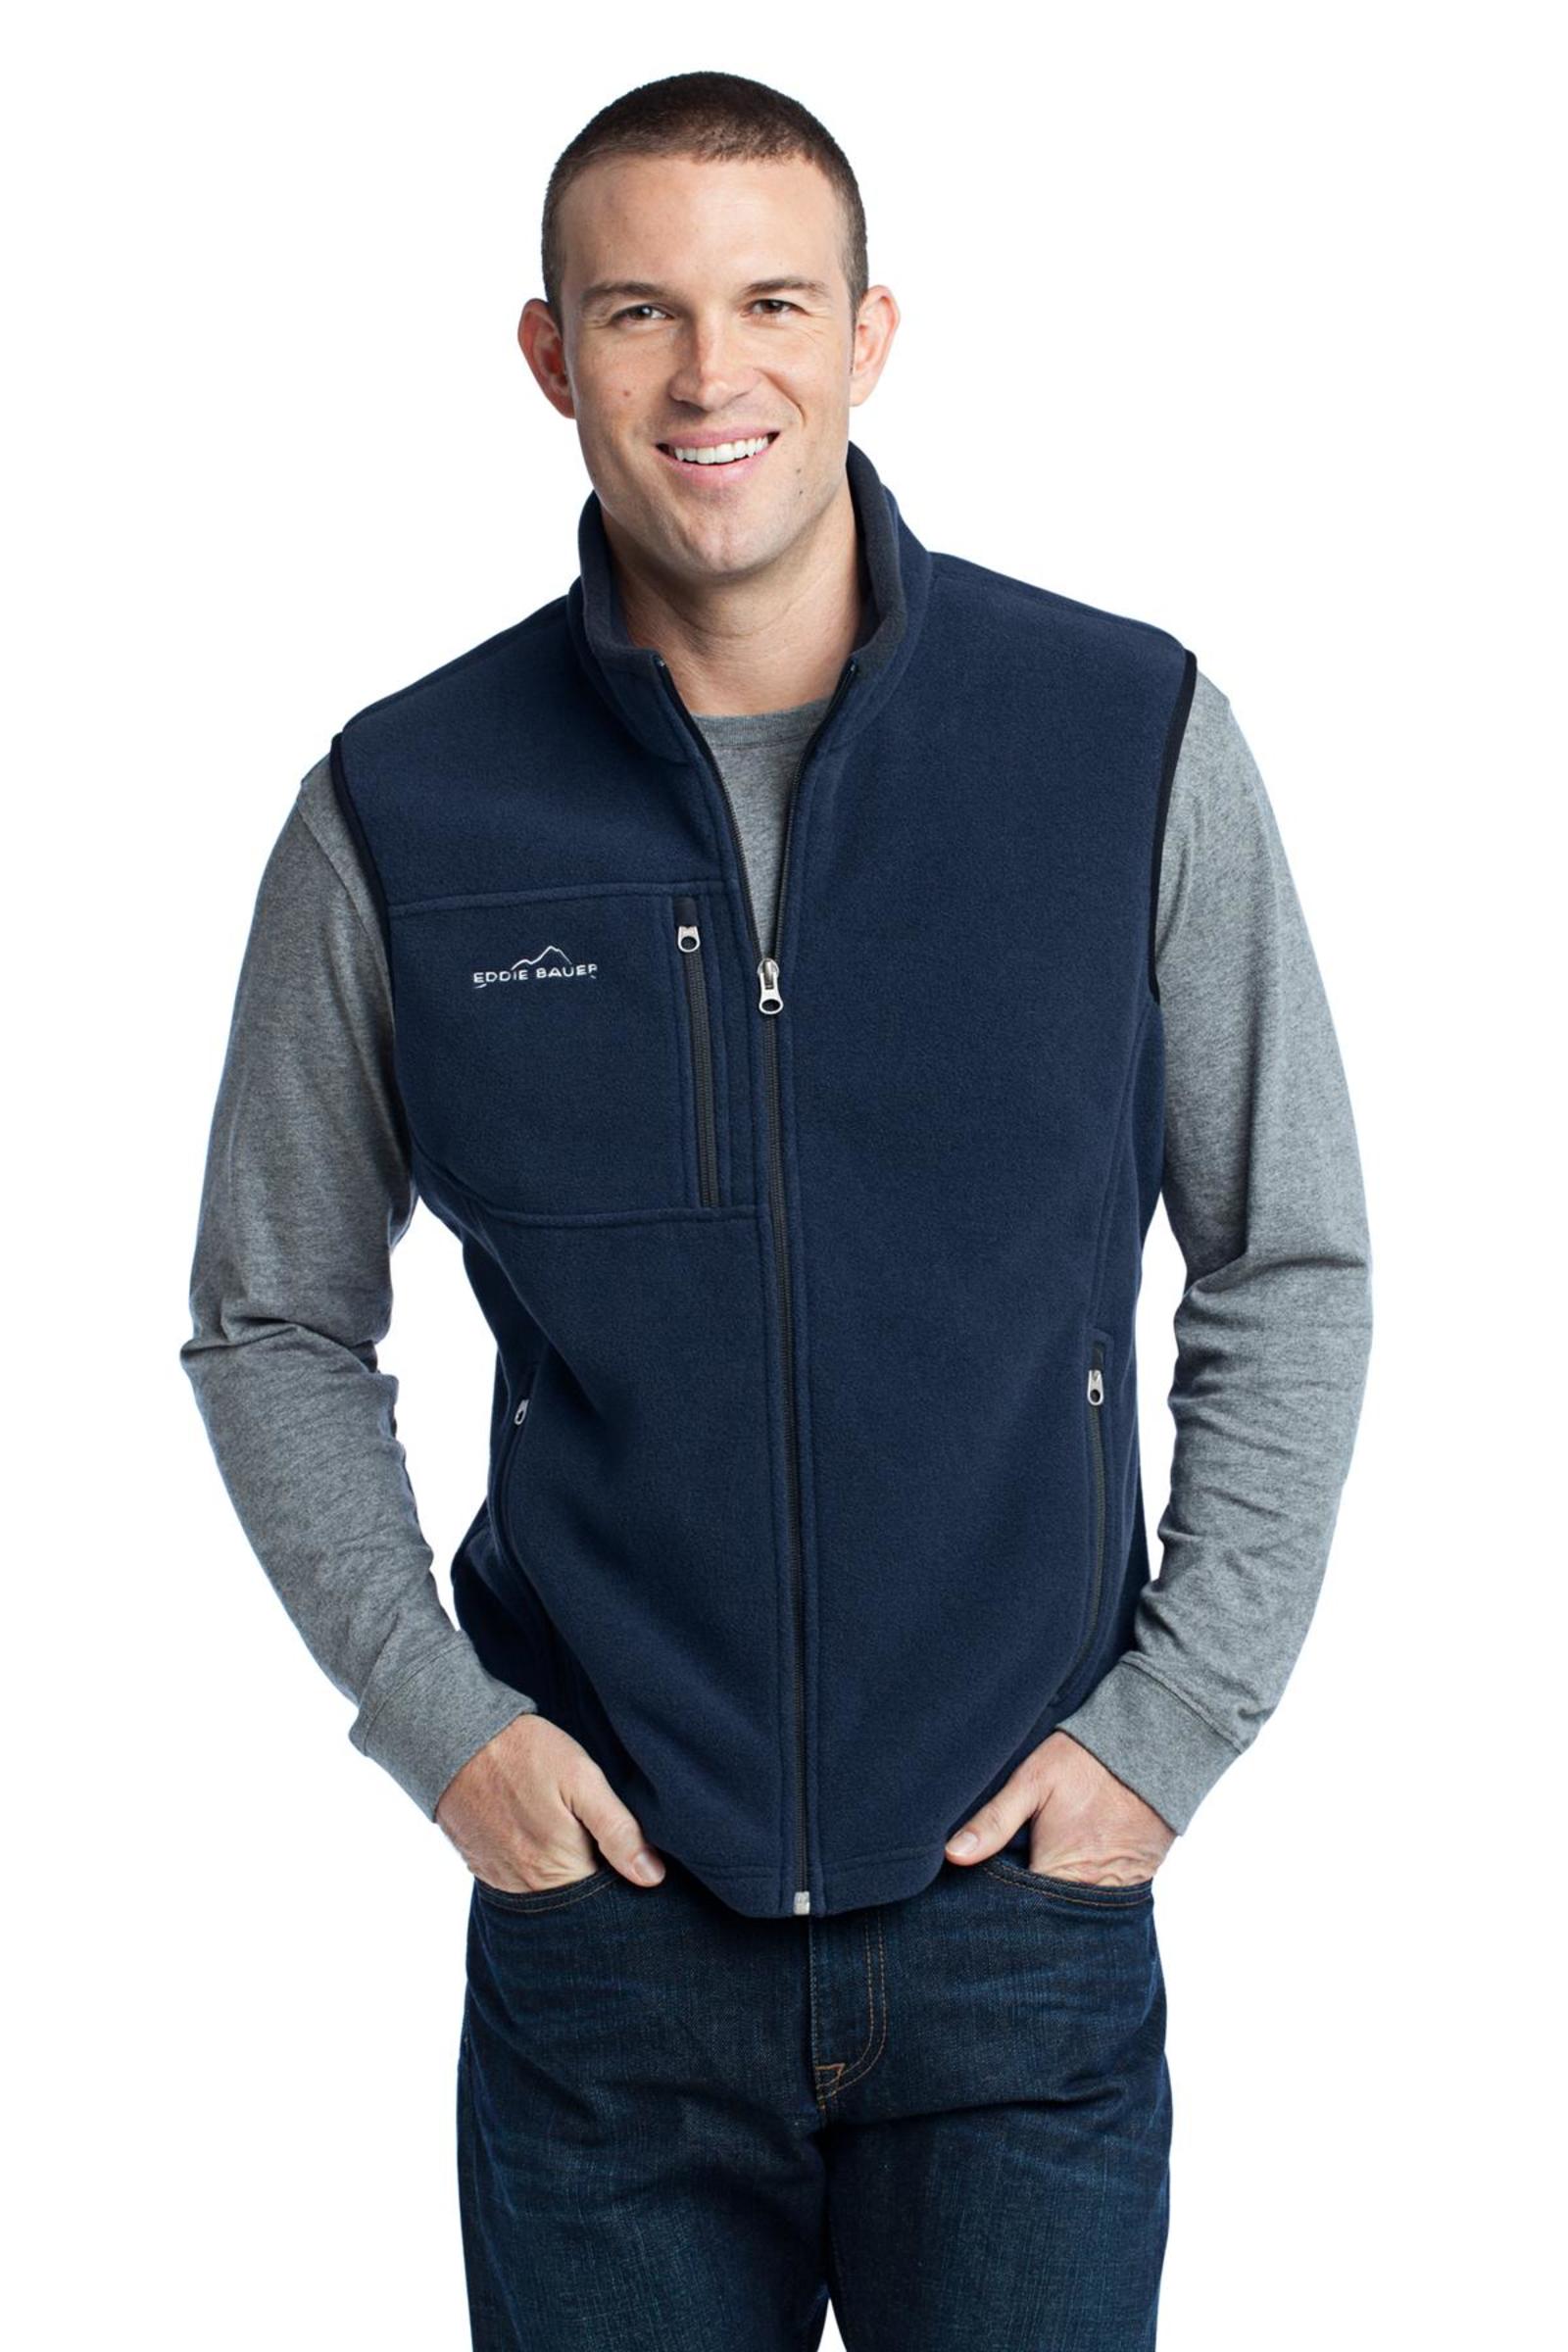 Eddie Bauer® Fleece Vest - Men's** (Restrictions Apply - see description) -  Western Heritage Company, Inc